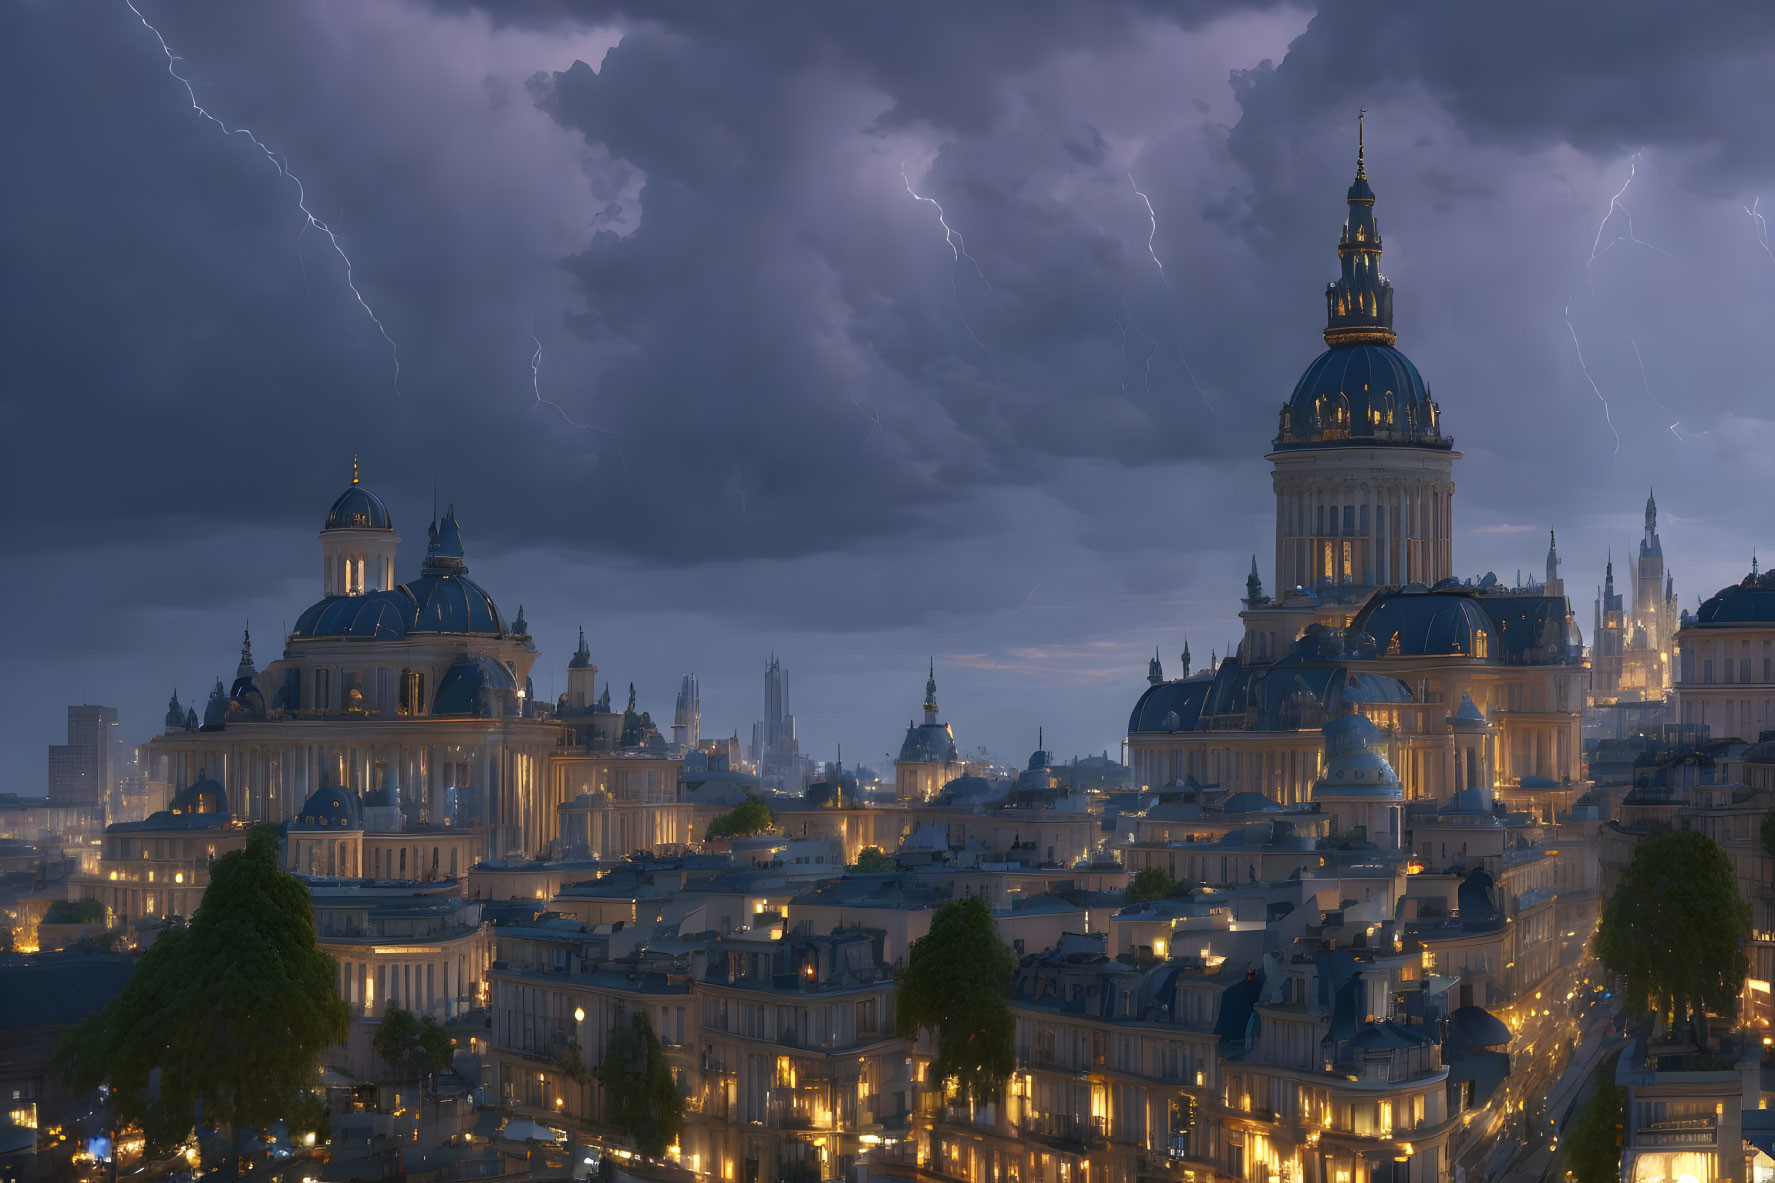 Evening European city before a thunderstorm